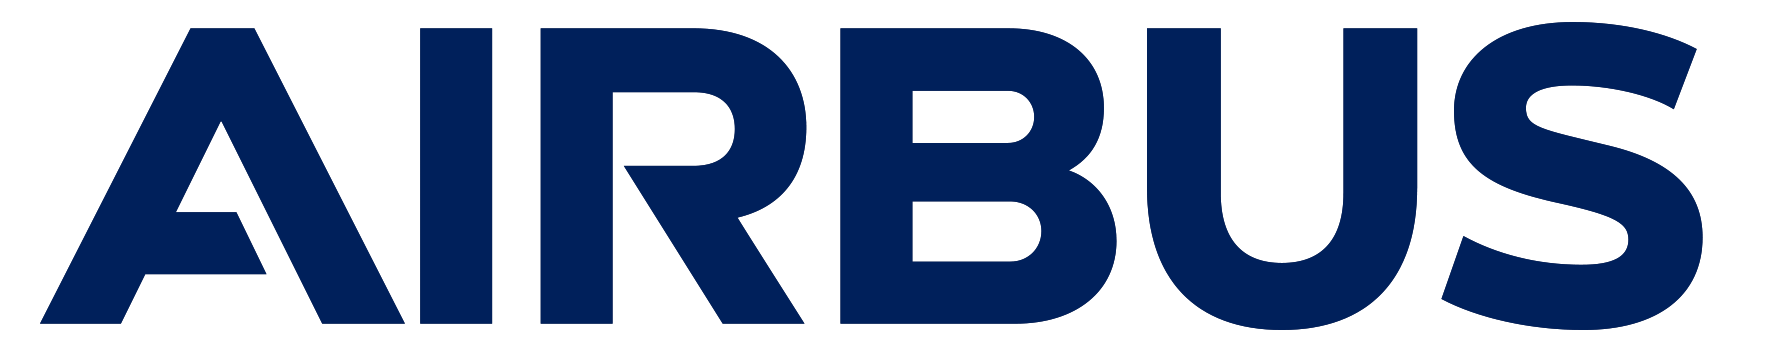 File:airbus Logo 2017.png - Airbus, Transparent background PNG HD thumbnail